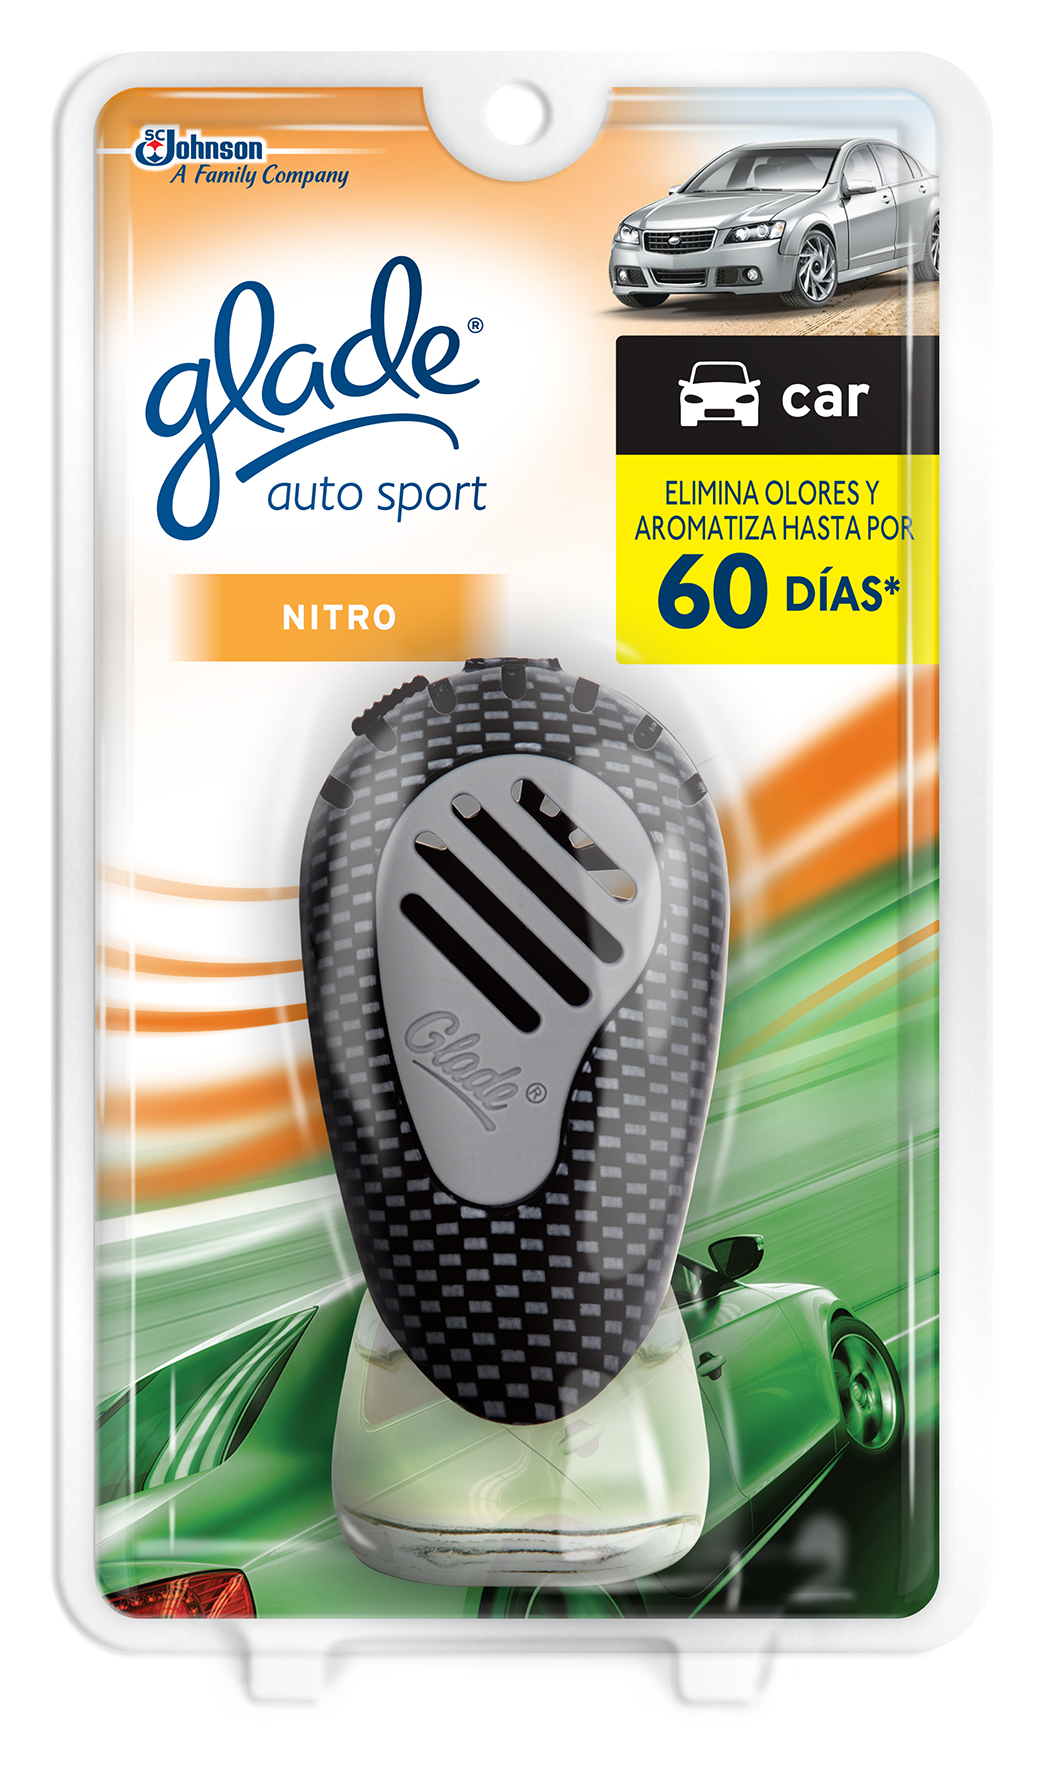 Glade® Auto Sport Aparato Nitro